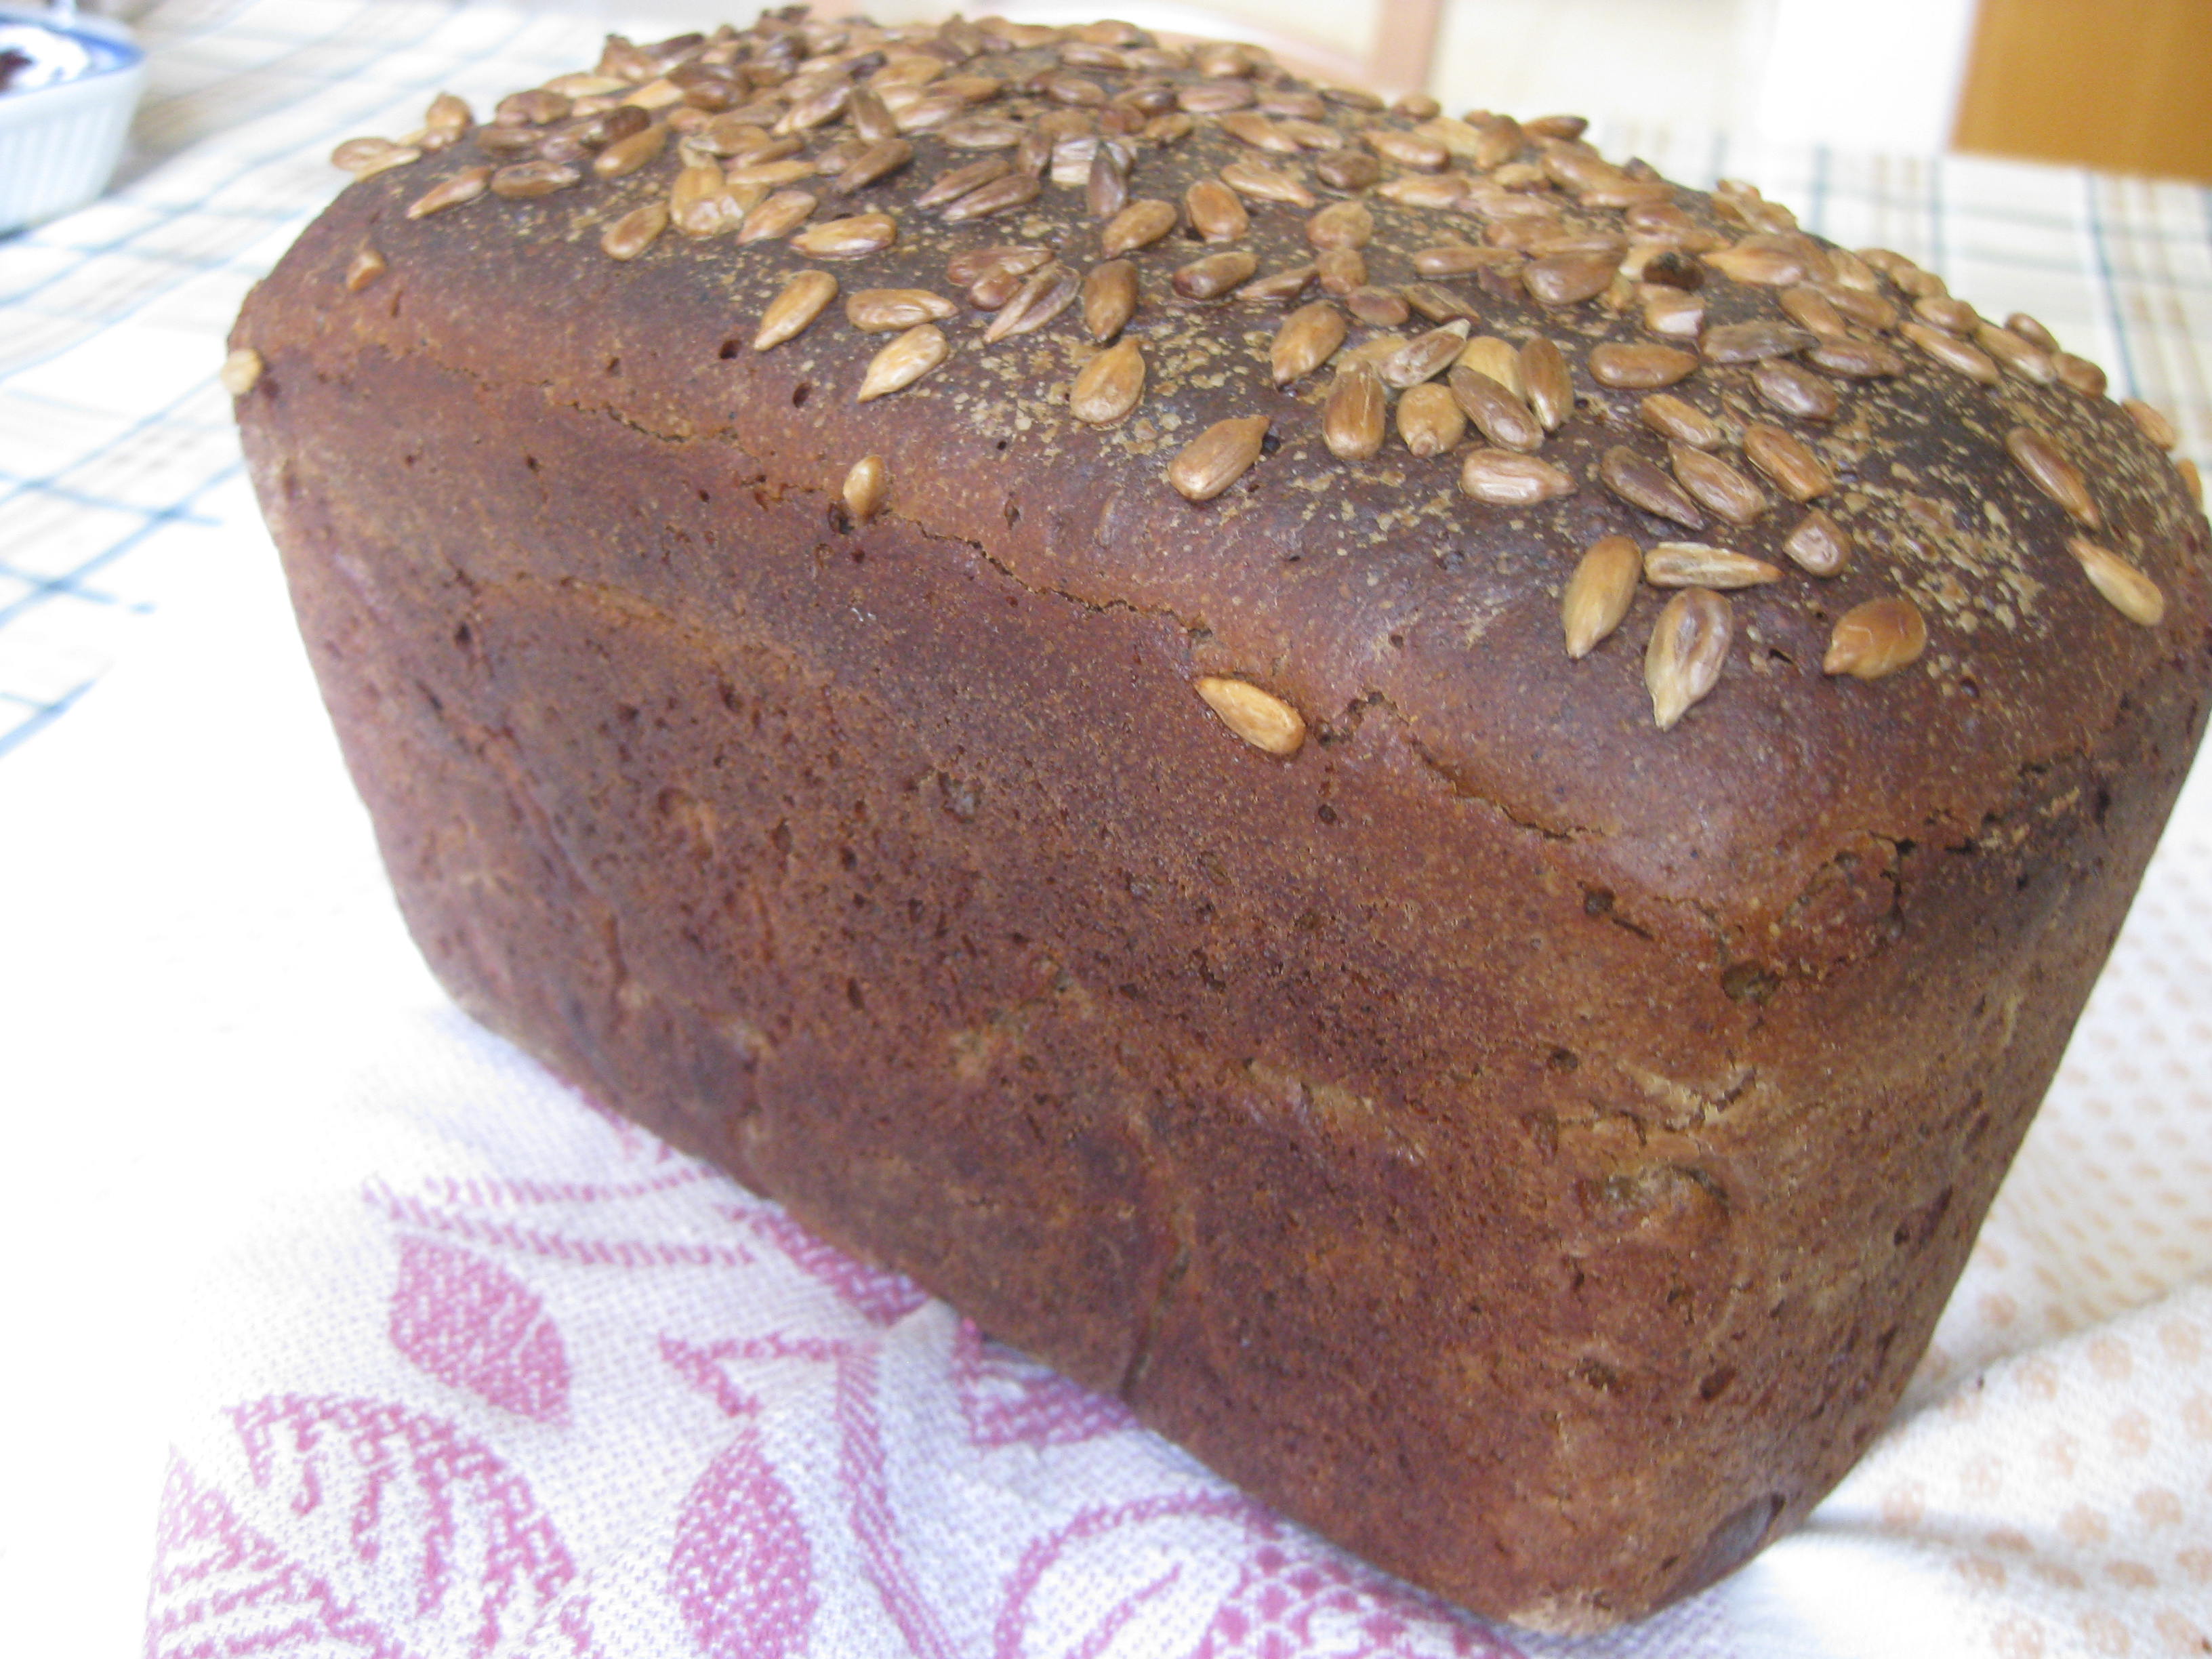 Žitno-pšeničný chléb založený na ruštině